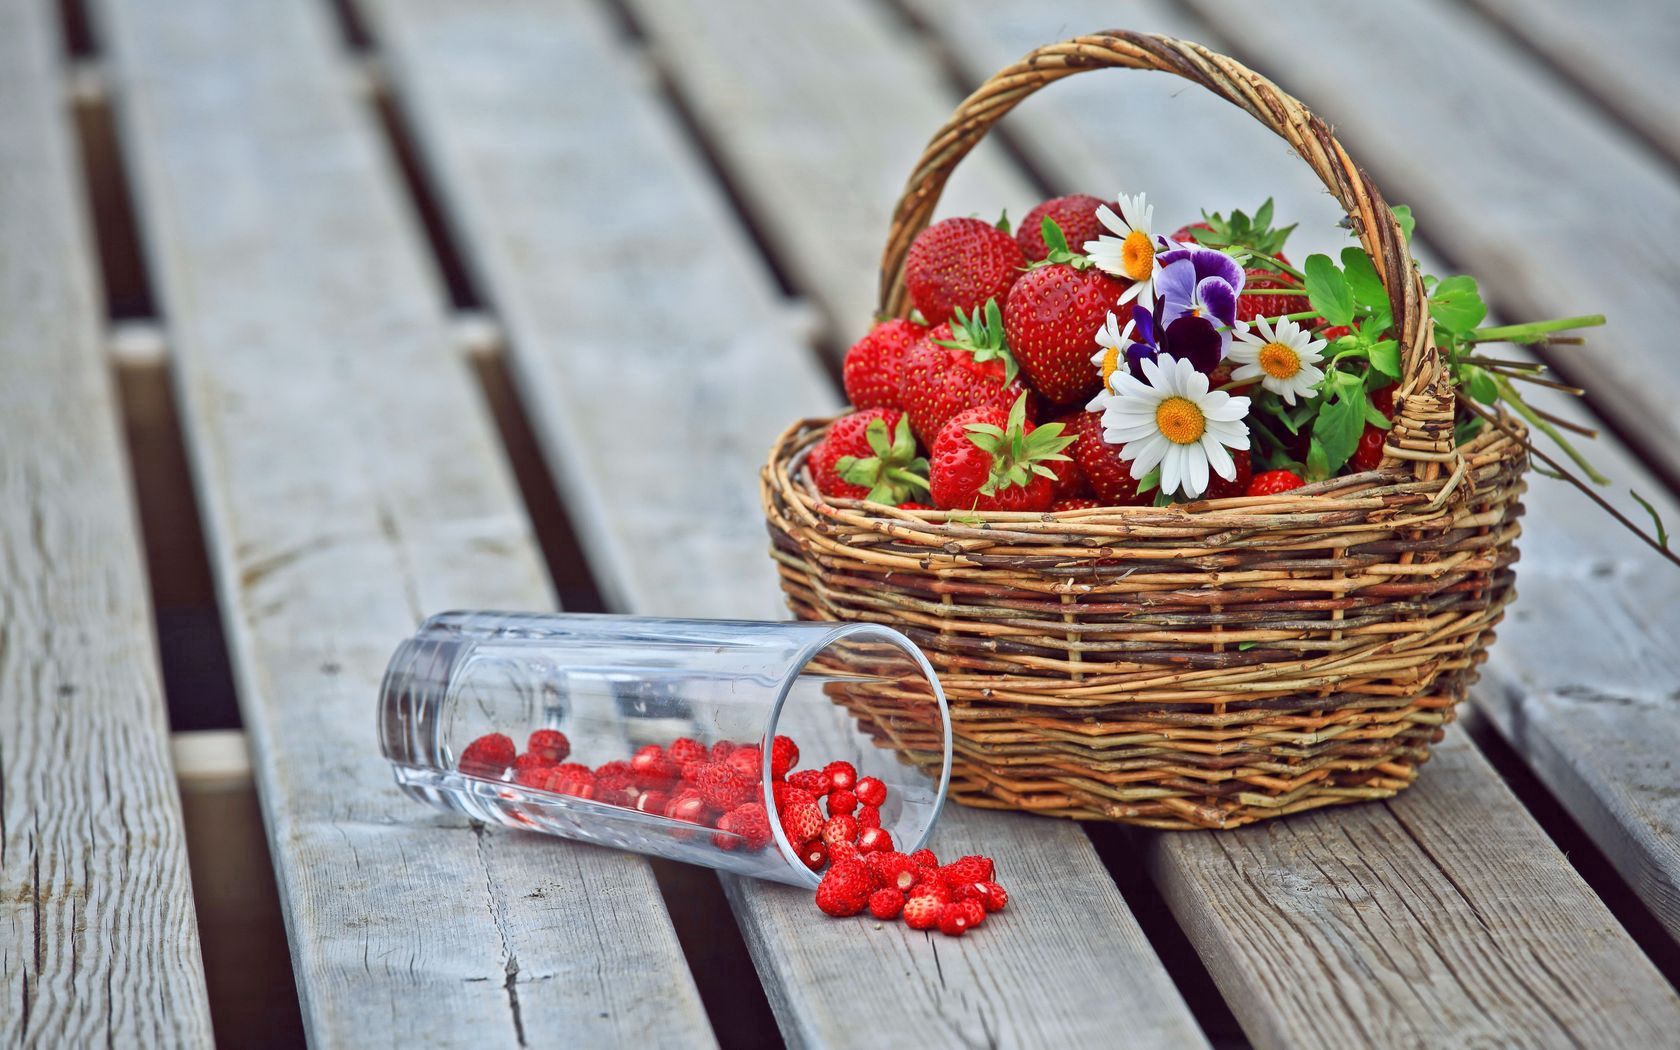 strawberry, camomile, flowers, food, pansies, berries, glass, basket, wild strawberries